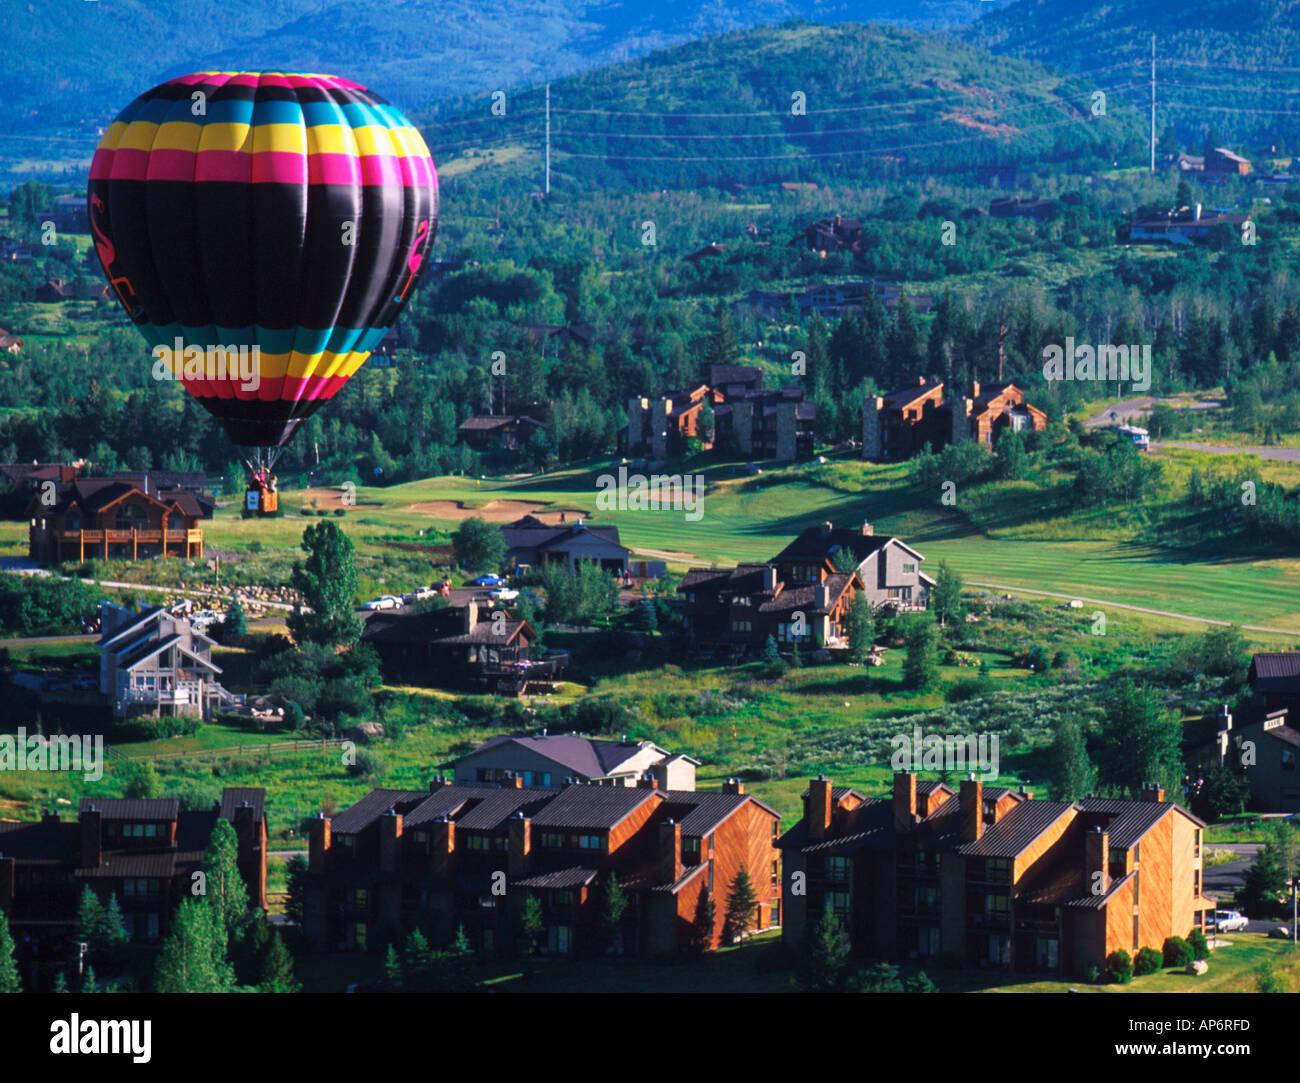 Heißluftballon über Dächer, Colorado, USA Stockfoto